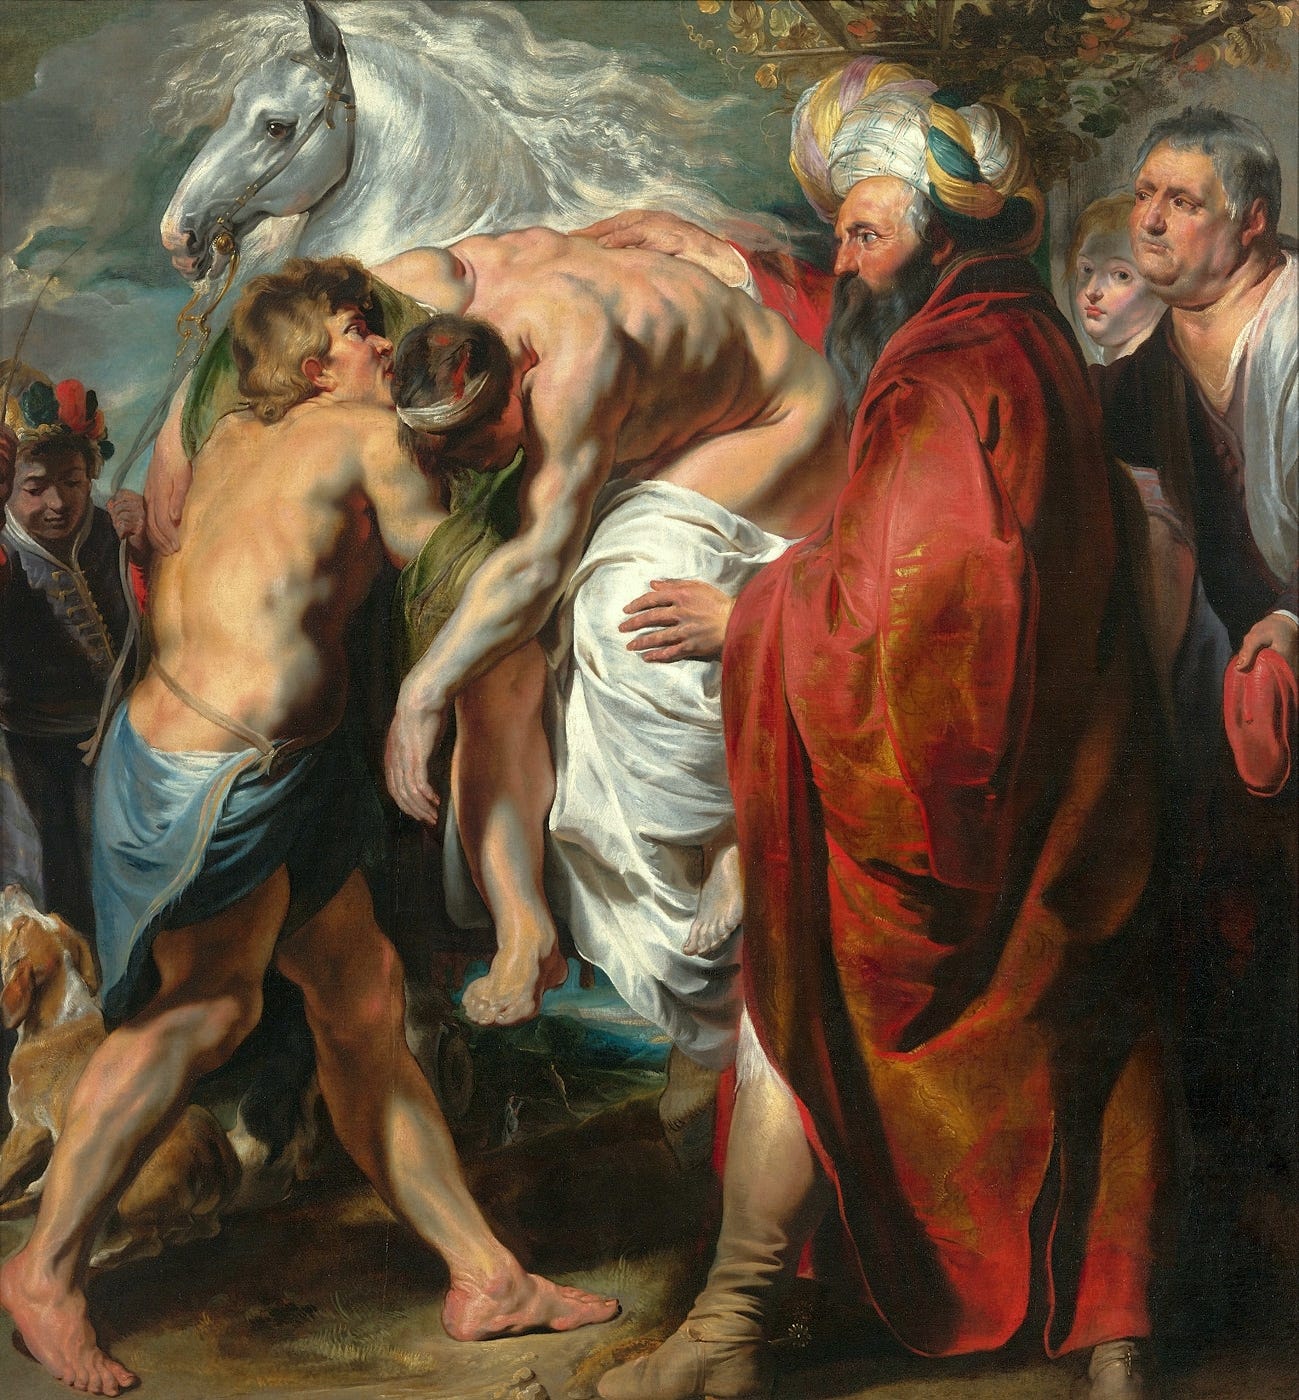 The Good Samaritan by Jacob Jordaens, c. 1616